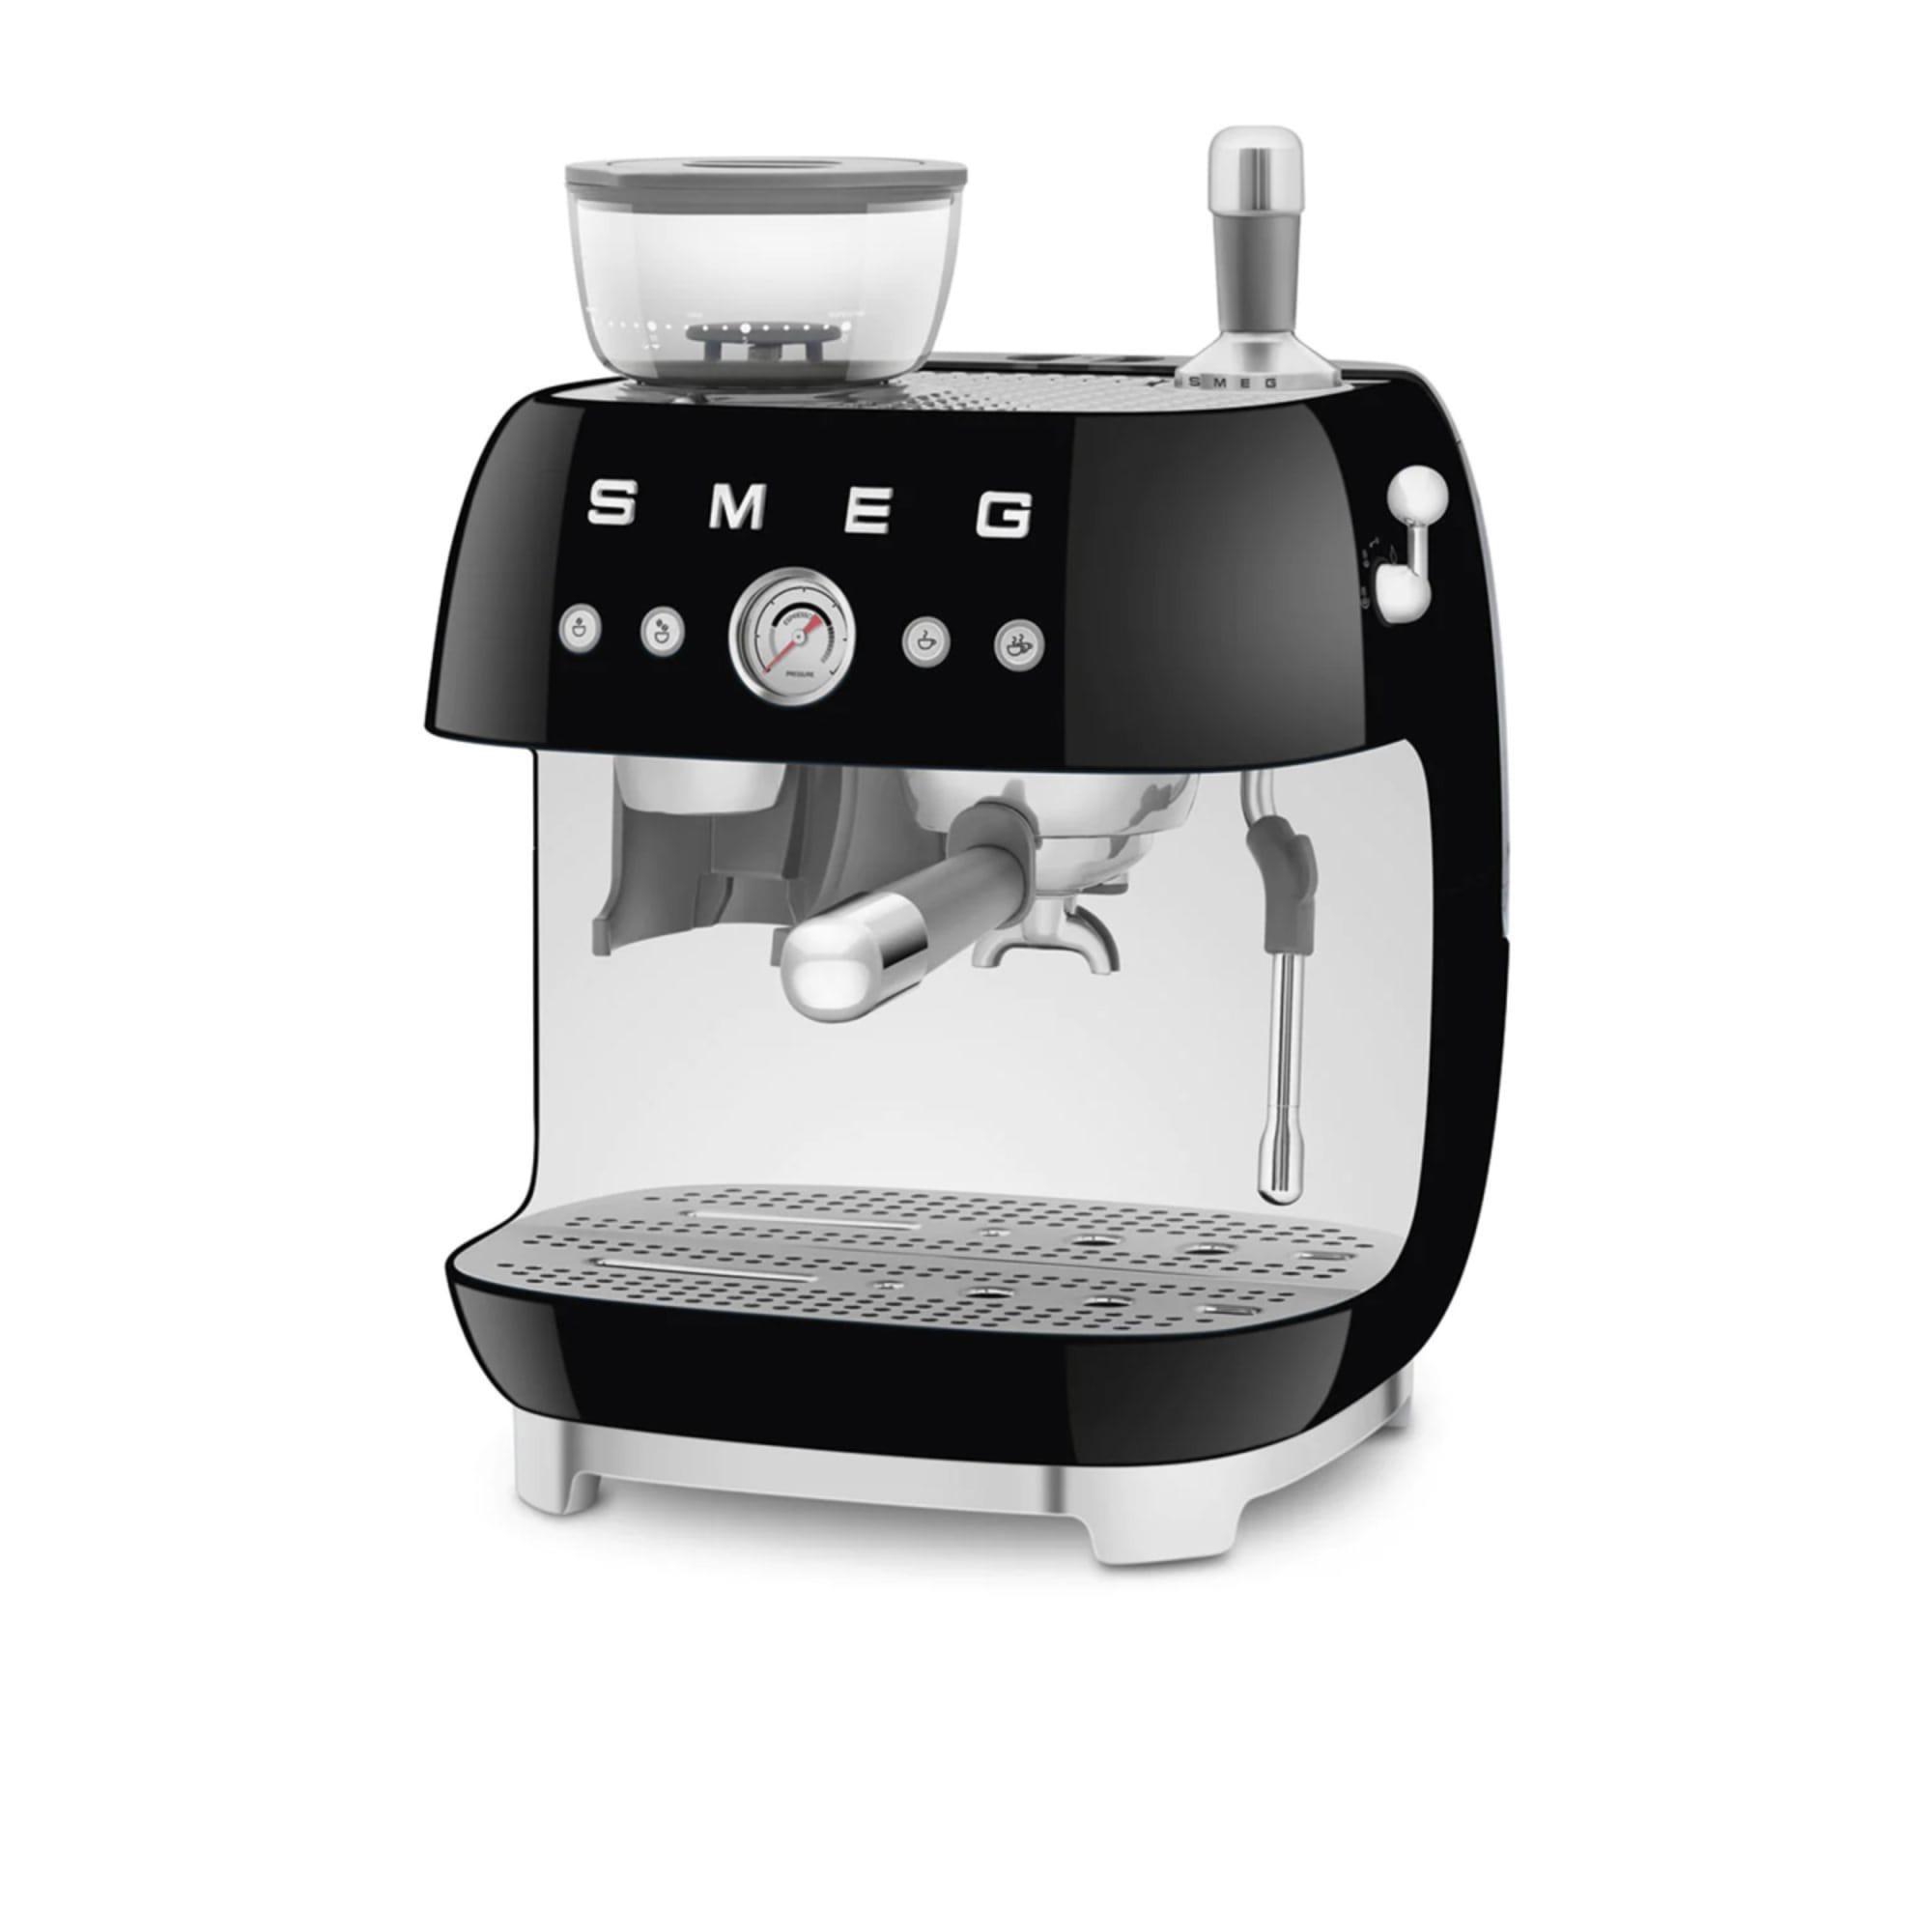 Smeg 50's Retro Style Espresso Machine with Built In Grinder Black Image 10